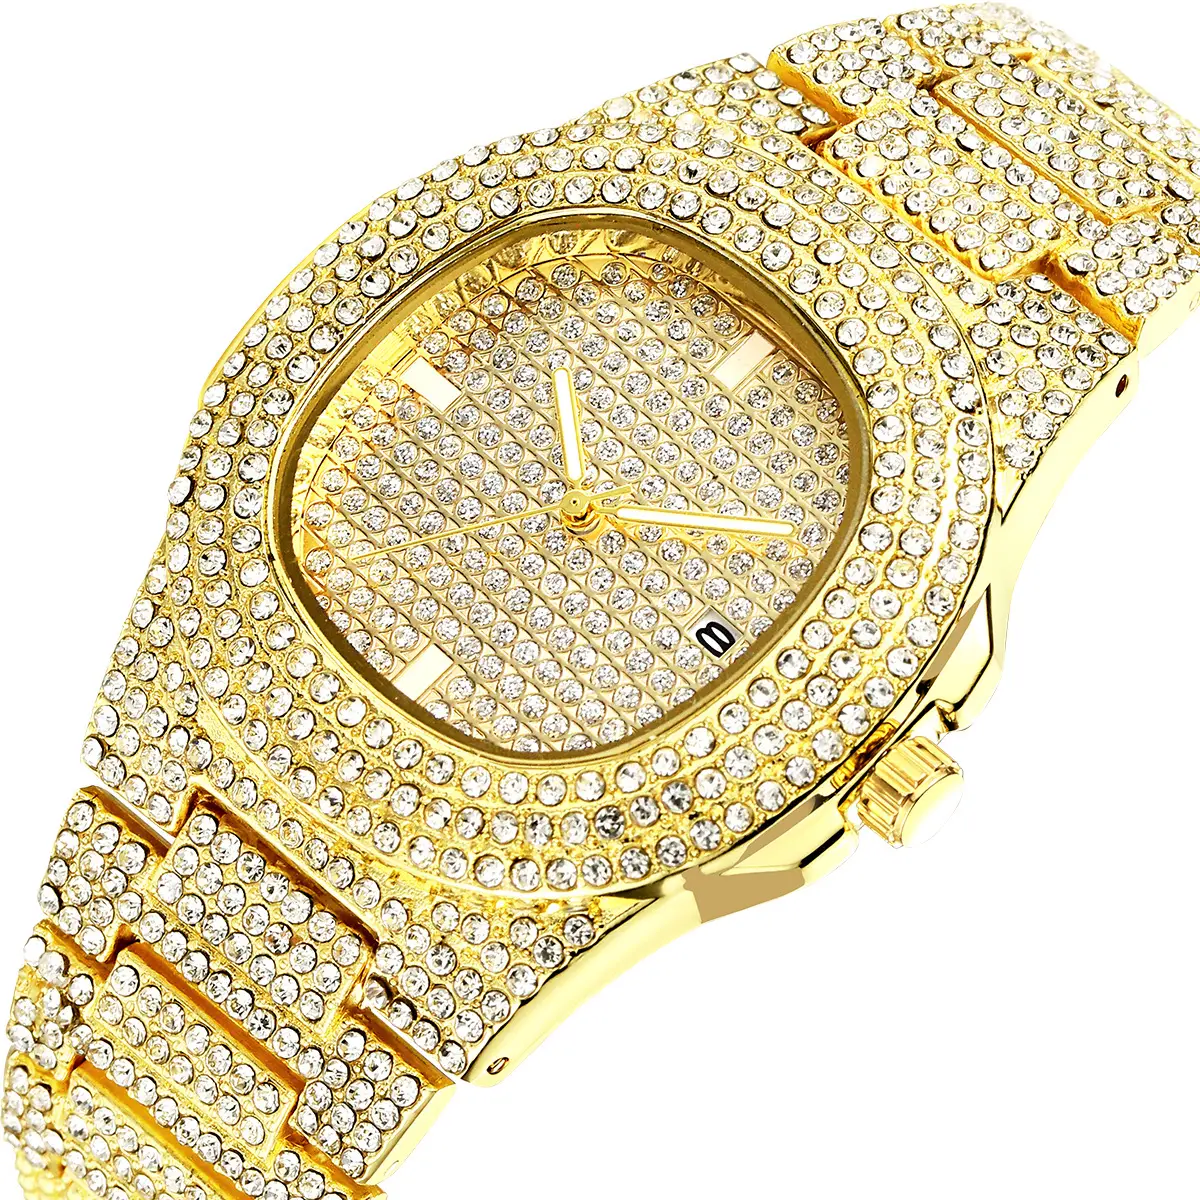 Mens Watches Hot Sale Moissanite Watch For Men Fashion Male Large Dial Hip Hop Rhinestone Quartz Analog Wrist Watches